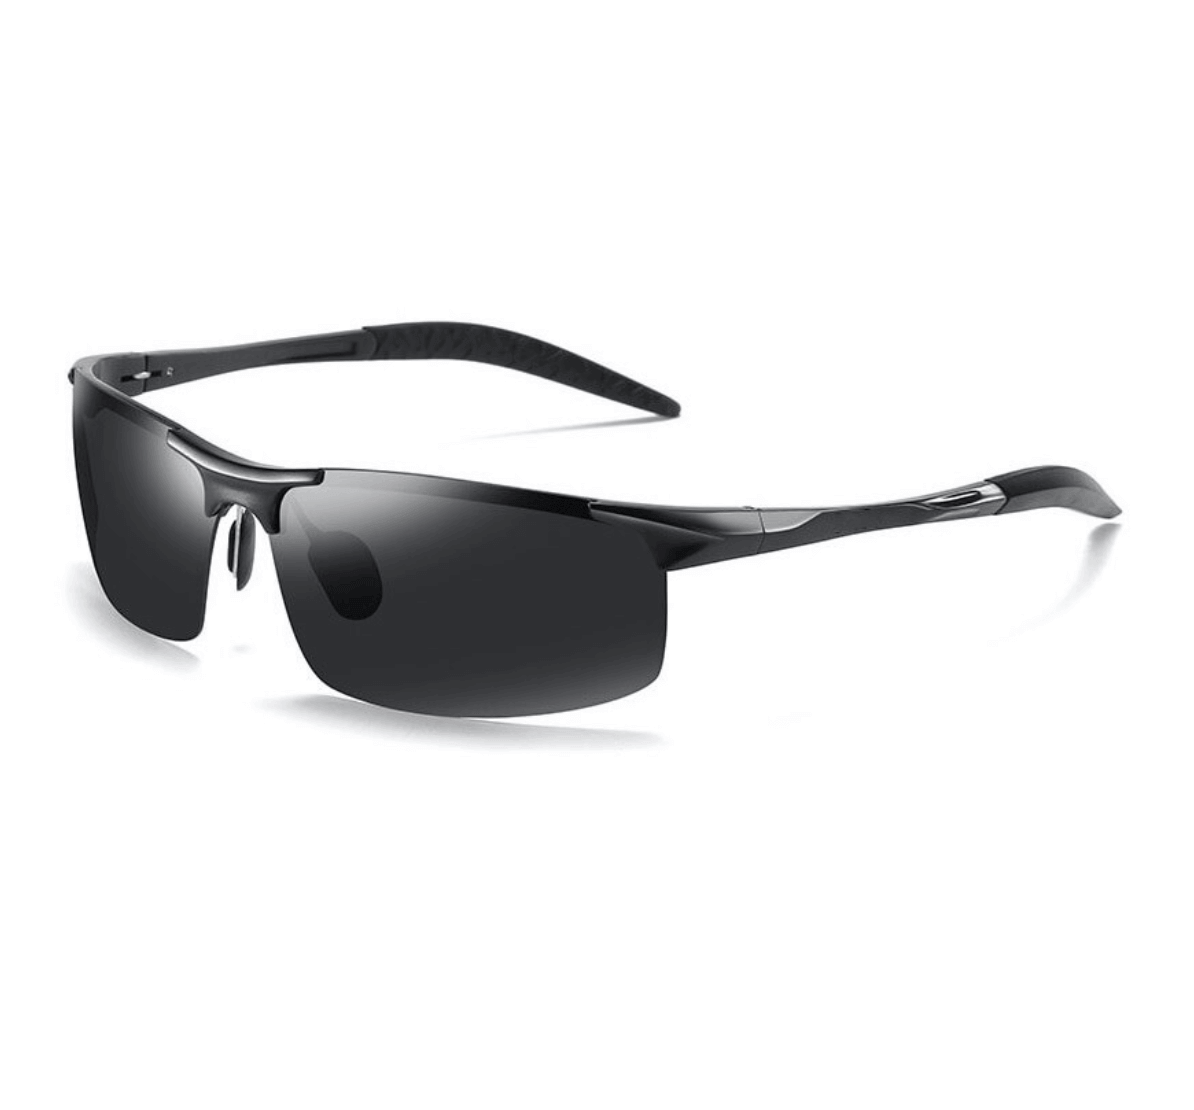 Custom Polarized Sunglasses, Al-Mg sunglasses, custom logo polarized sunglasses, design your own sunglasses with logo, custom sunglasses manufacturers China, eyeglasses supplier